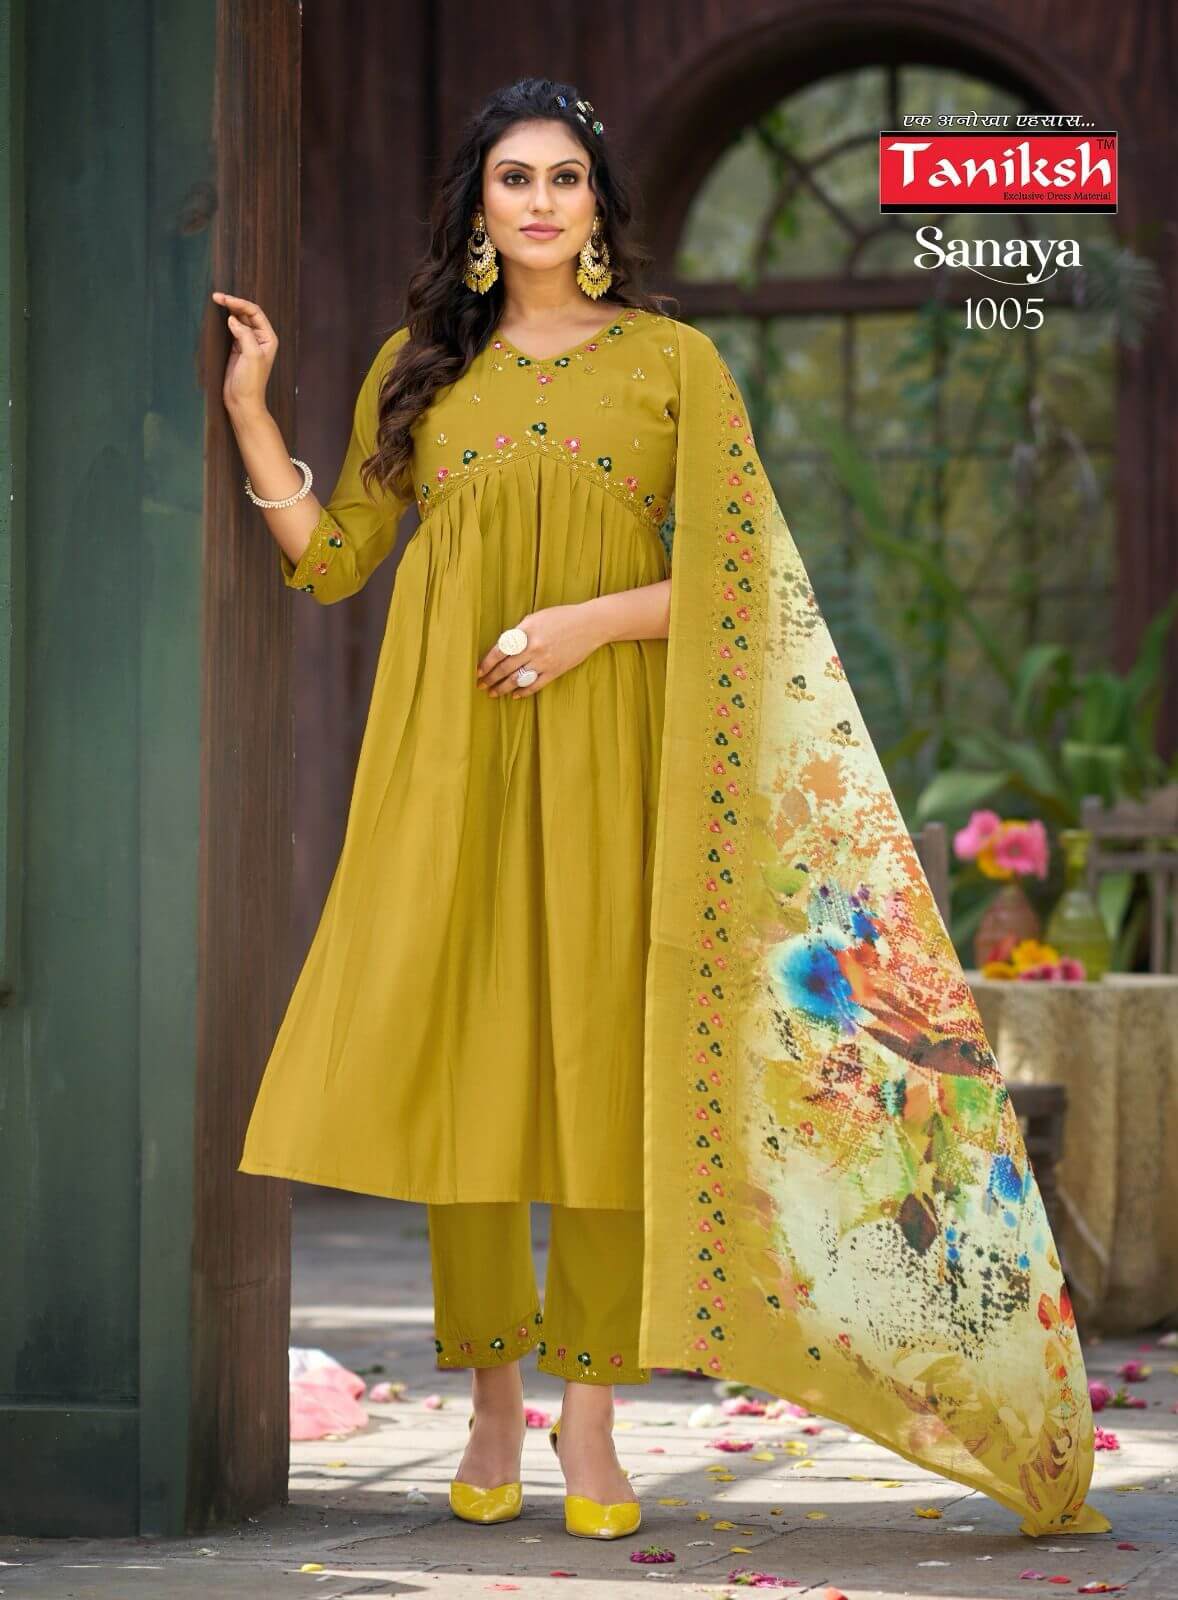 Taniksh Sanaya Vol 1 Alia Cut Readymade Dress Catalog collection 6